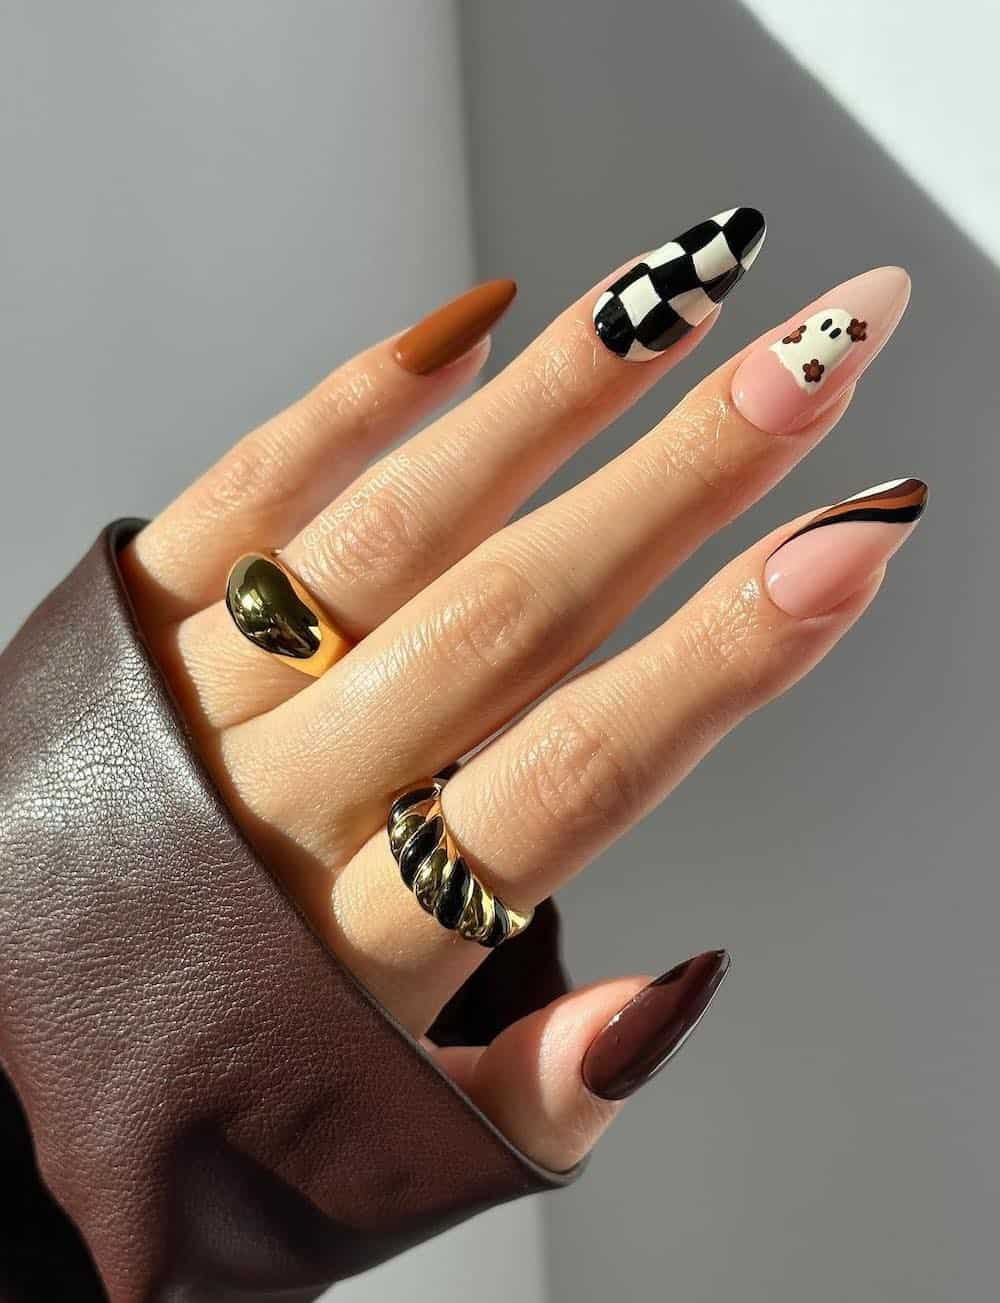 long almond nails featuring brown nail polish, ghost nail art, and checkerboard details